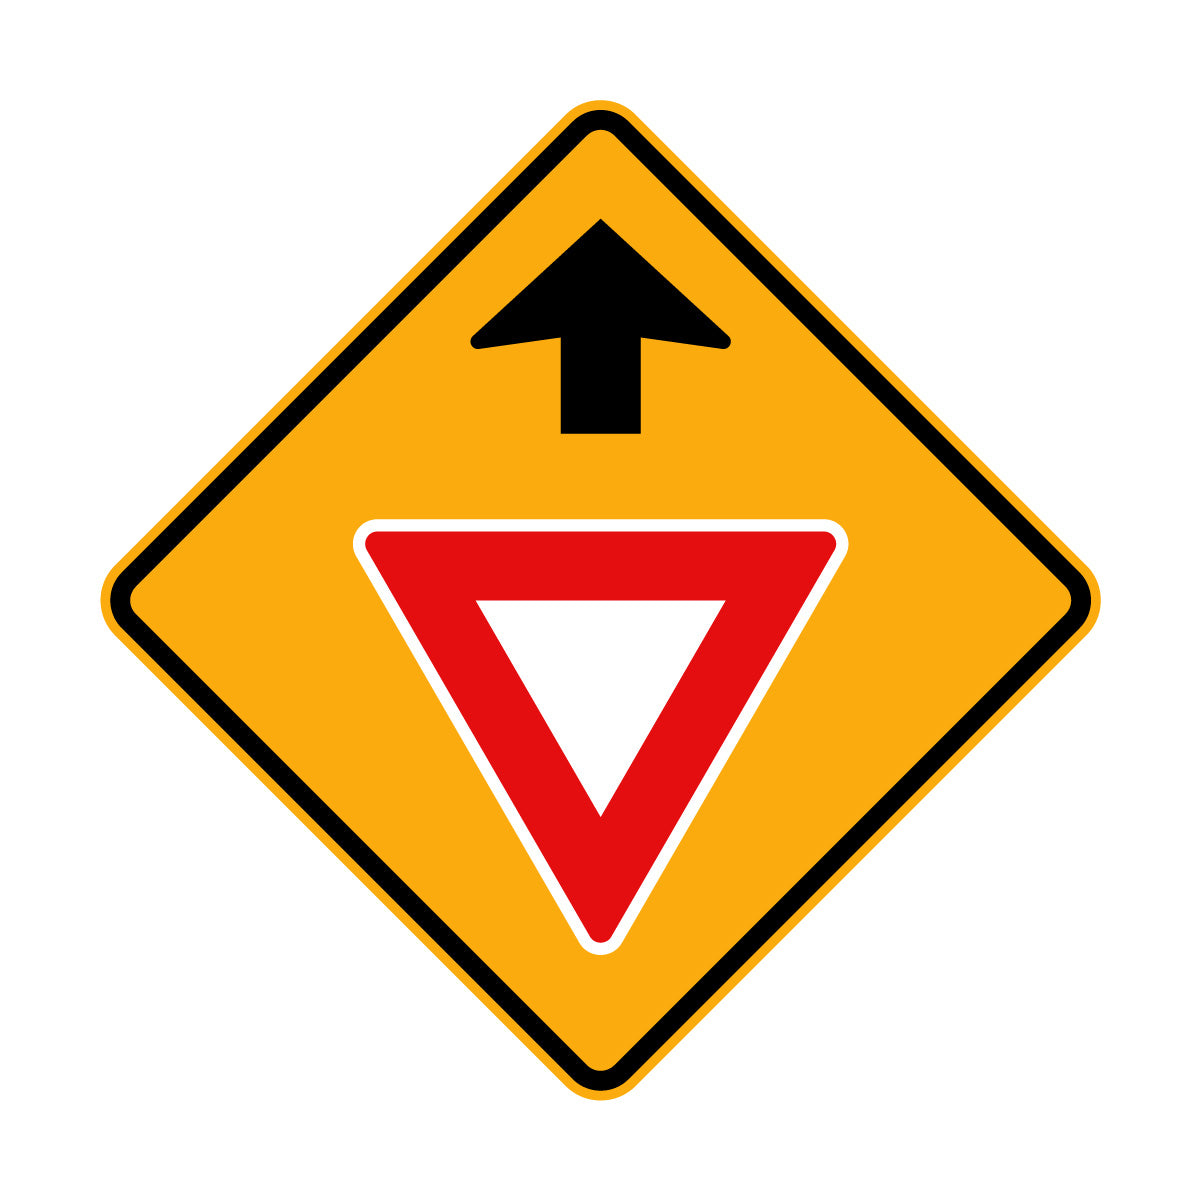 Warning: Give Way Ahead Sign